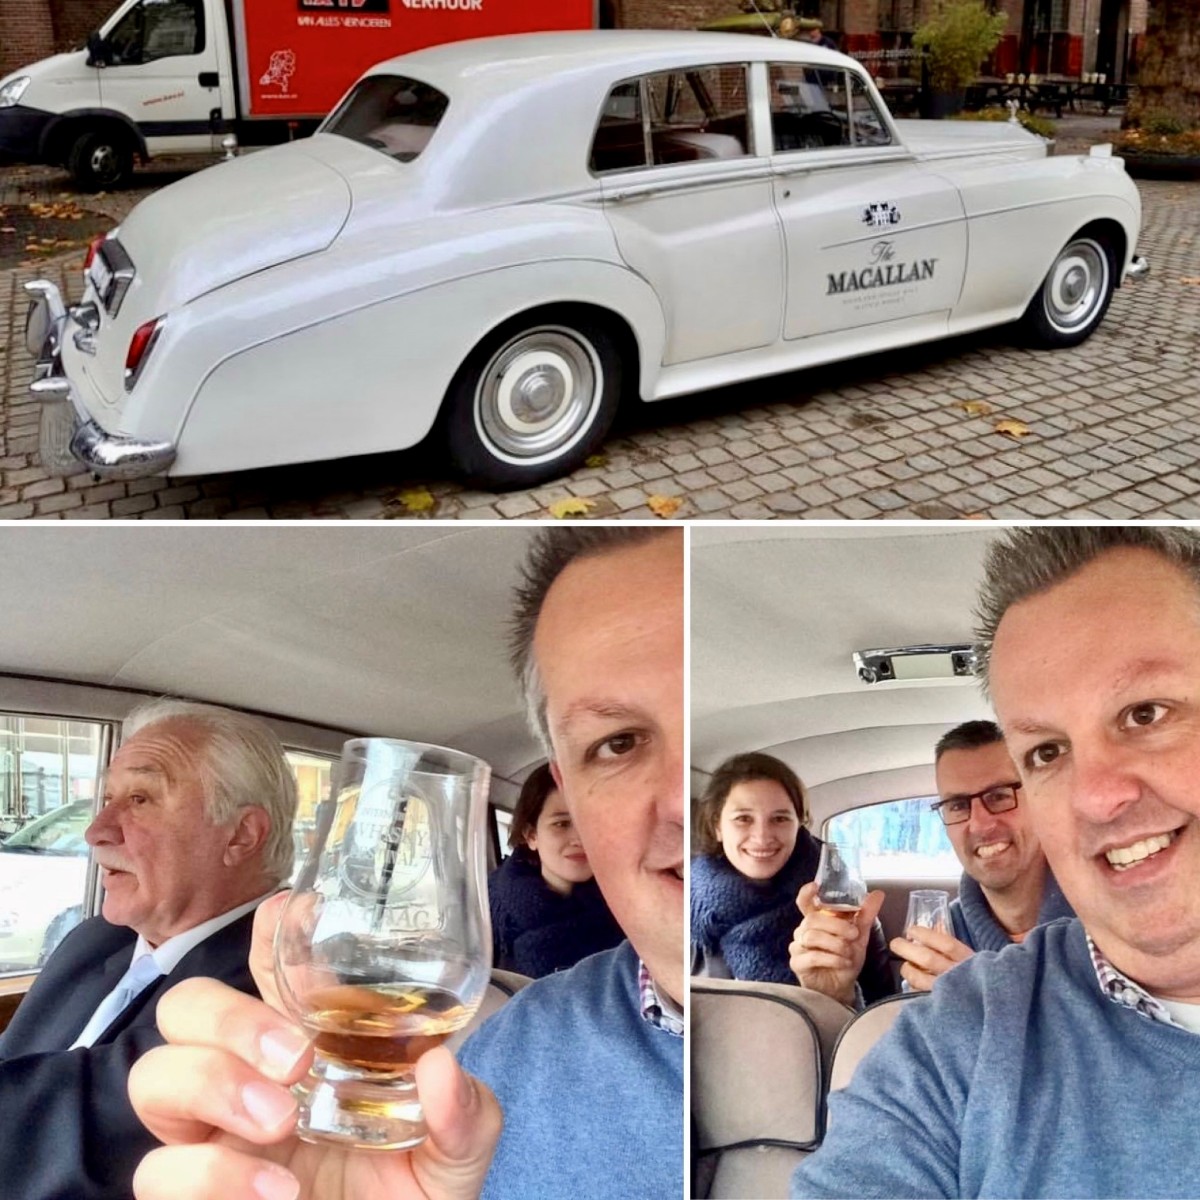 Throwback Memory: Whisky Tasting onboard The Macallan Rolls Royce.